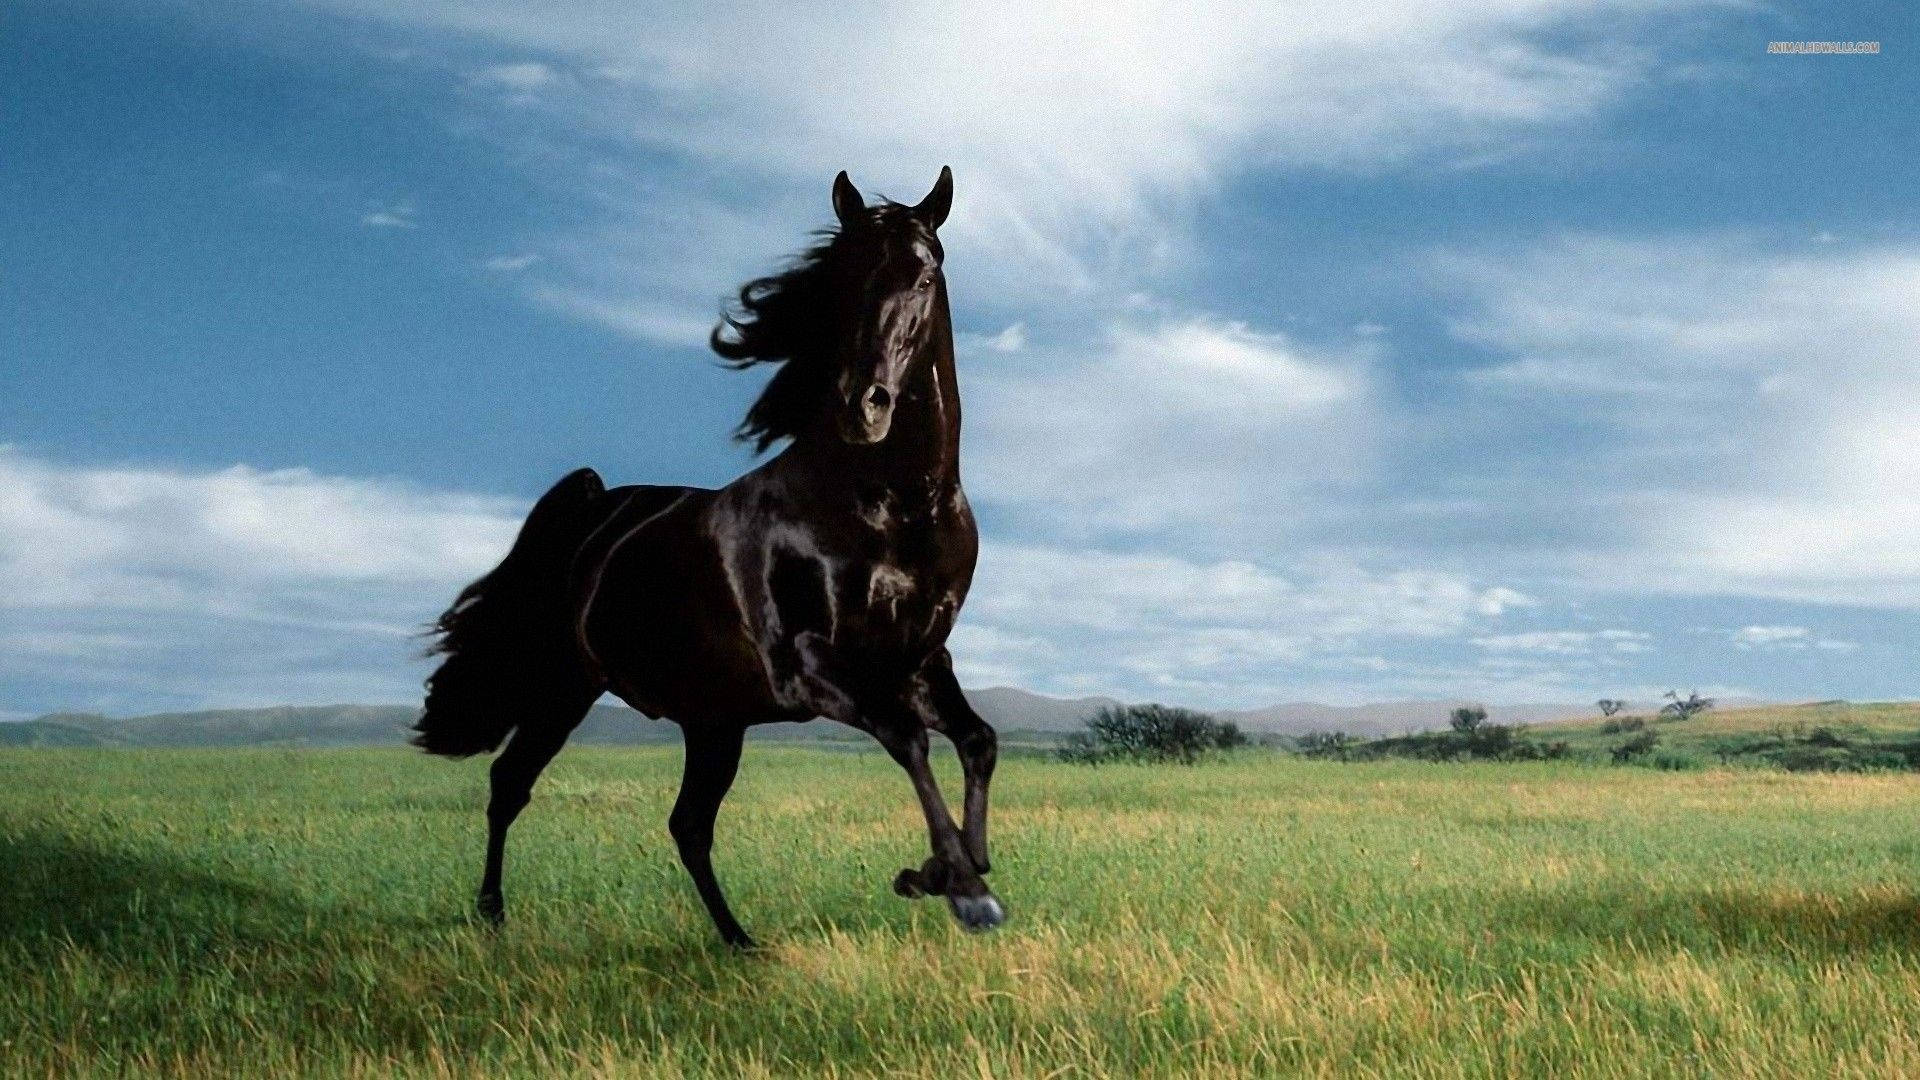 Black Horse | Adorable Horse Wallpaper Download | MobCup